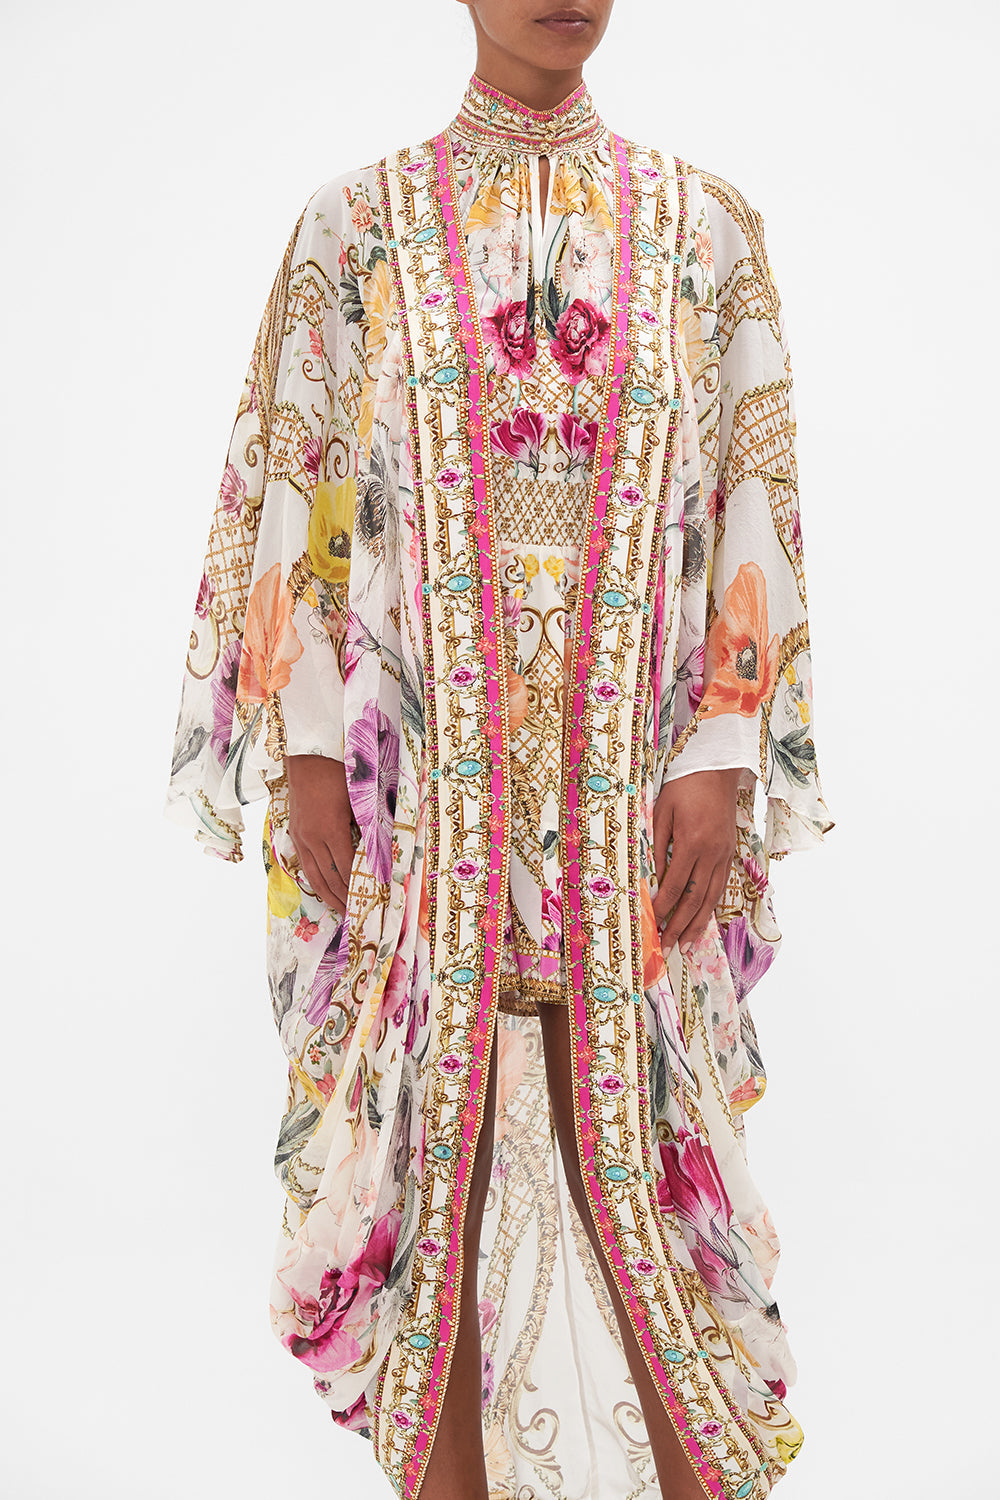 Crop view of model wearing CAMILLA silk floral kimono in Destiny Calling print